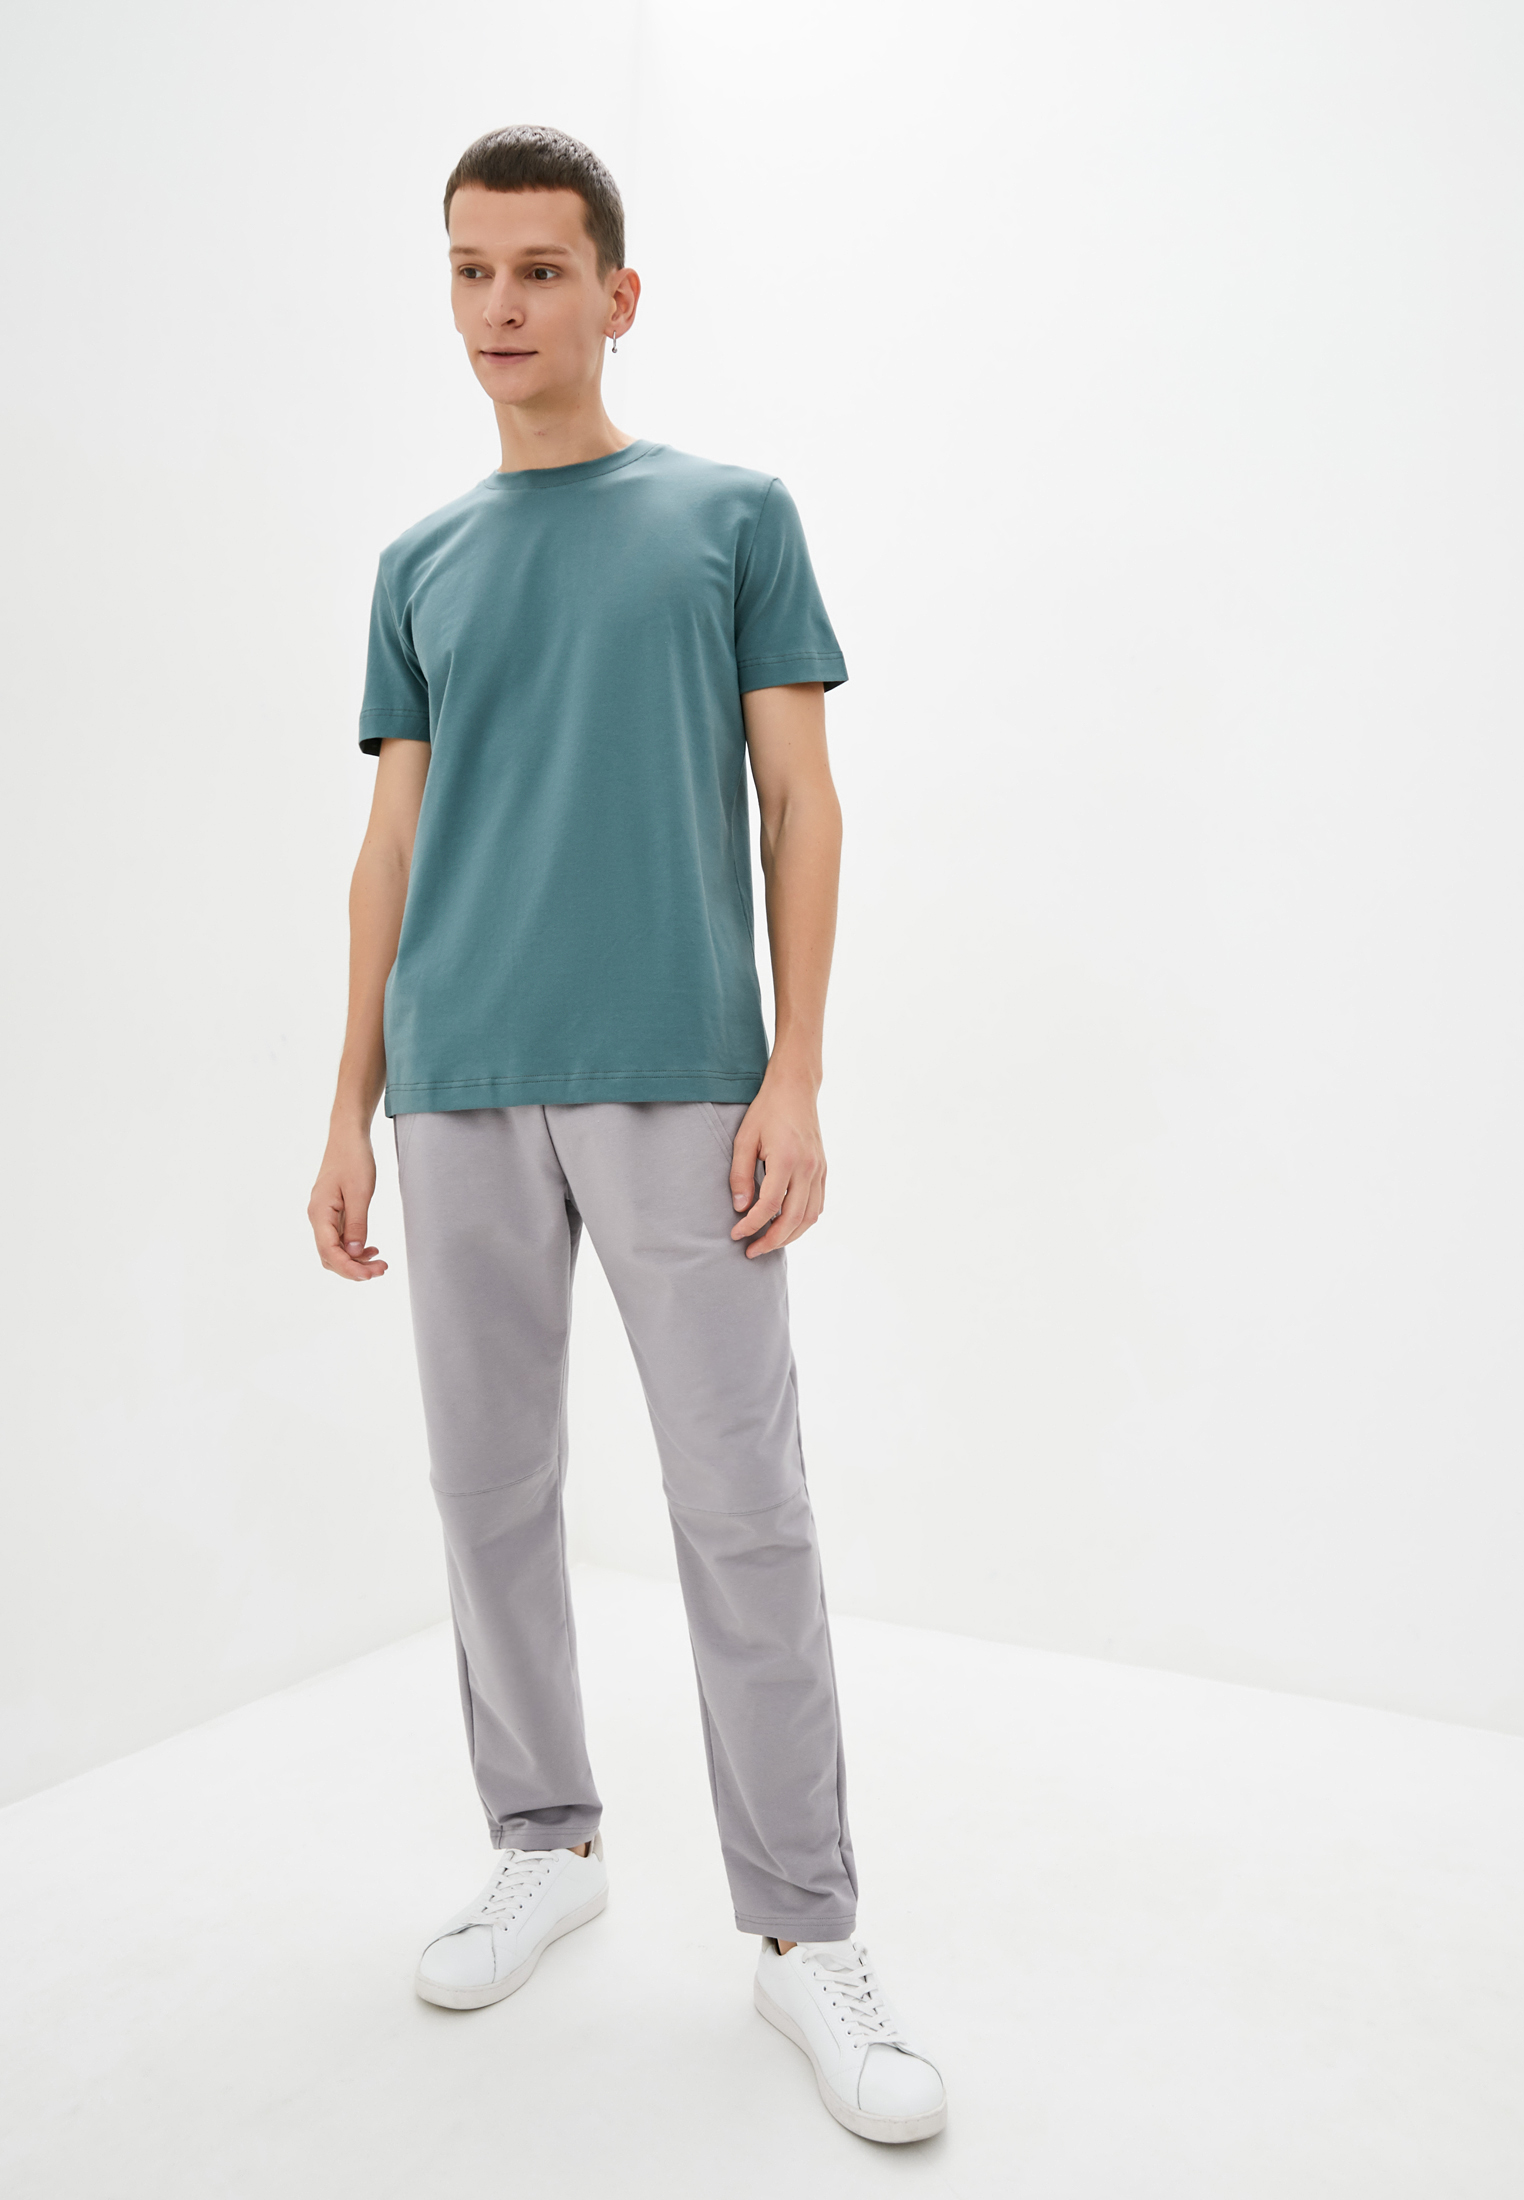 Pants with decorative pockets, vendor code: 1040-02.1, color: Grey